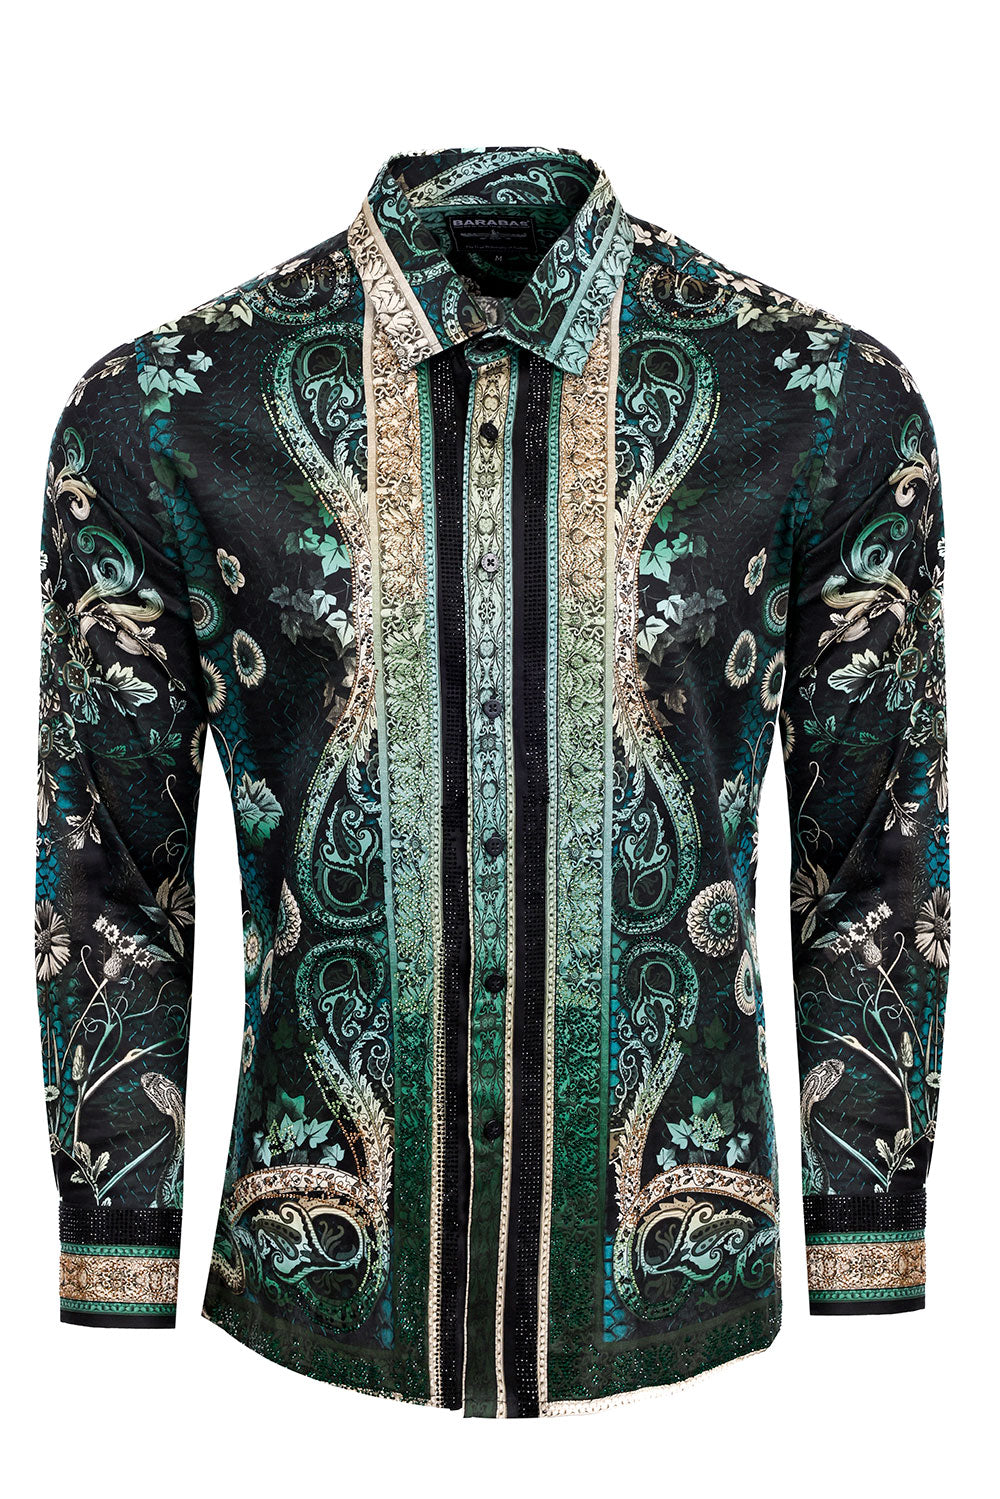 BARABAS Men's Rhinestone Floral Snake Skin Long Sleeve Shirts 3SPR408 Black